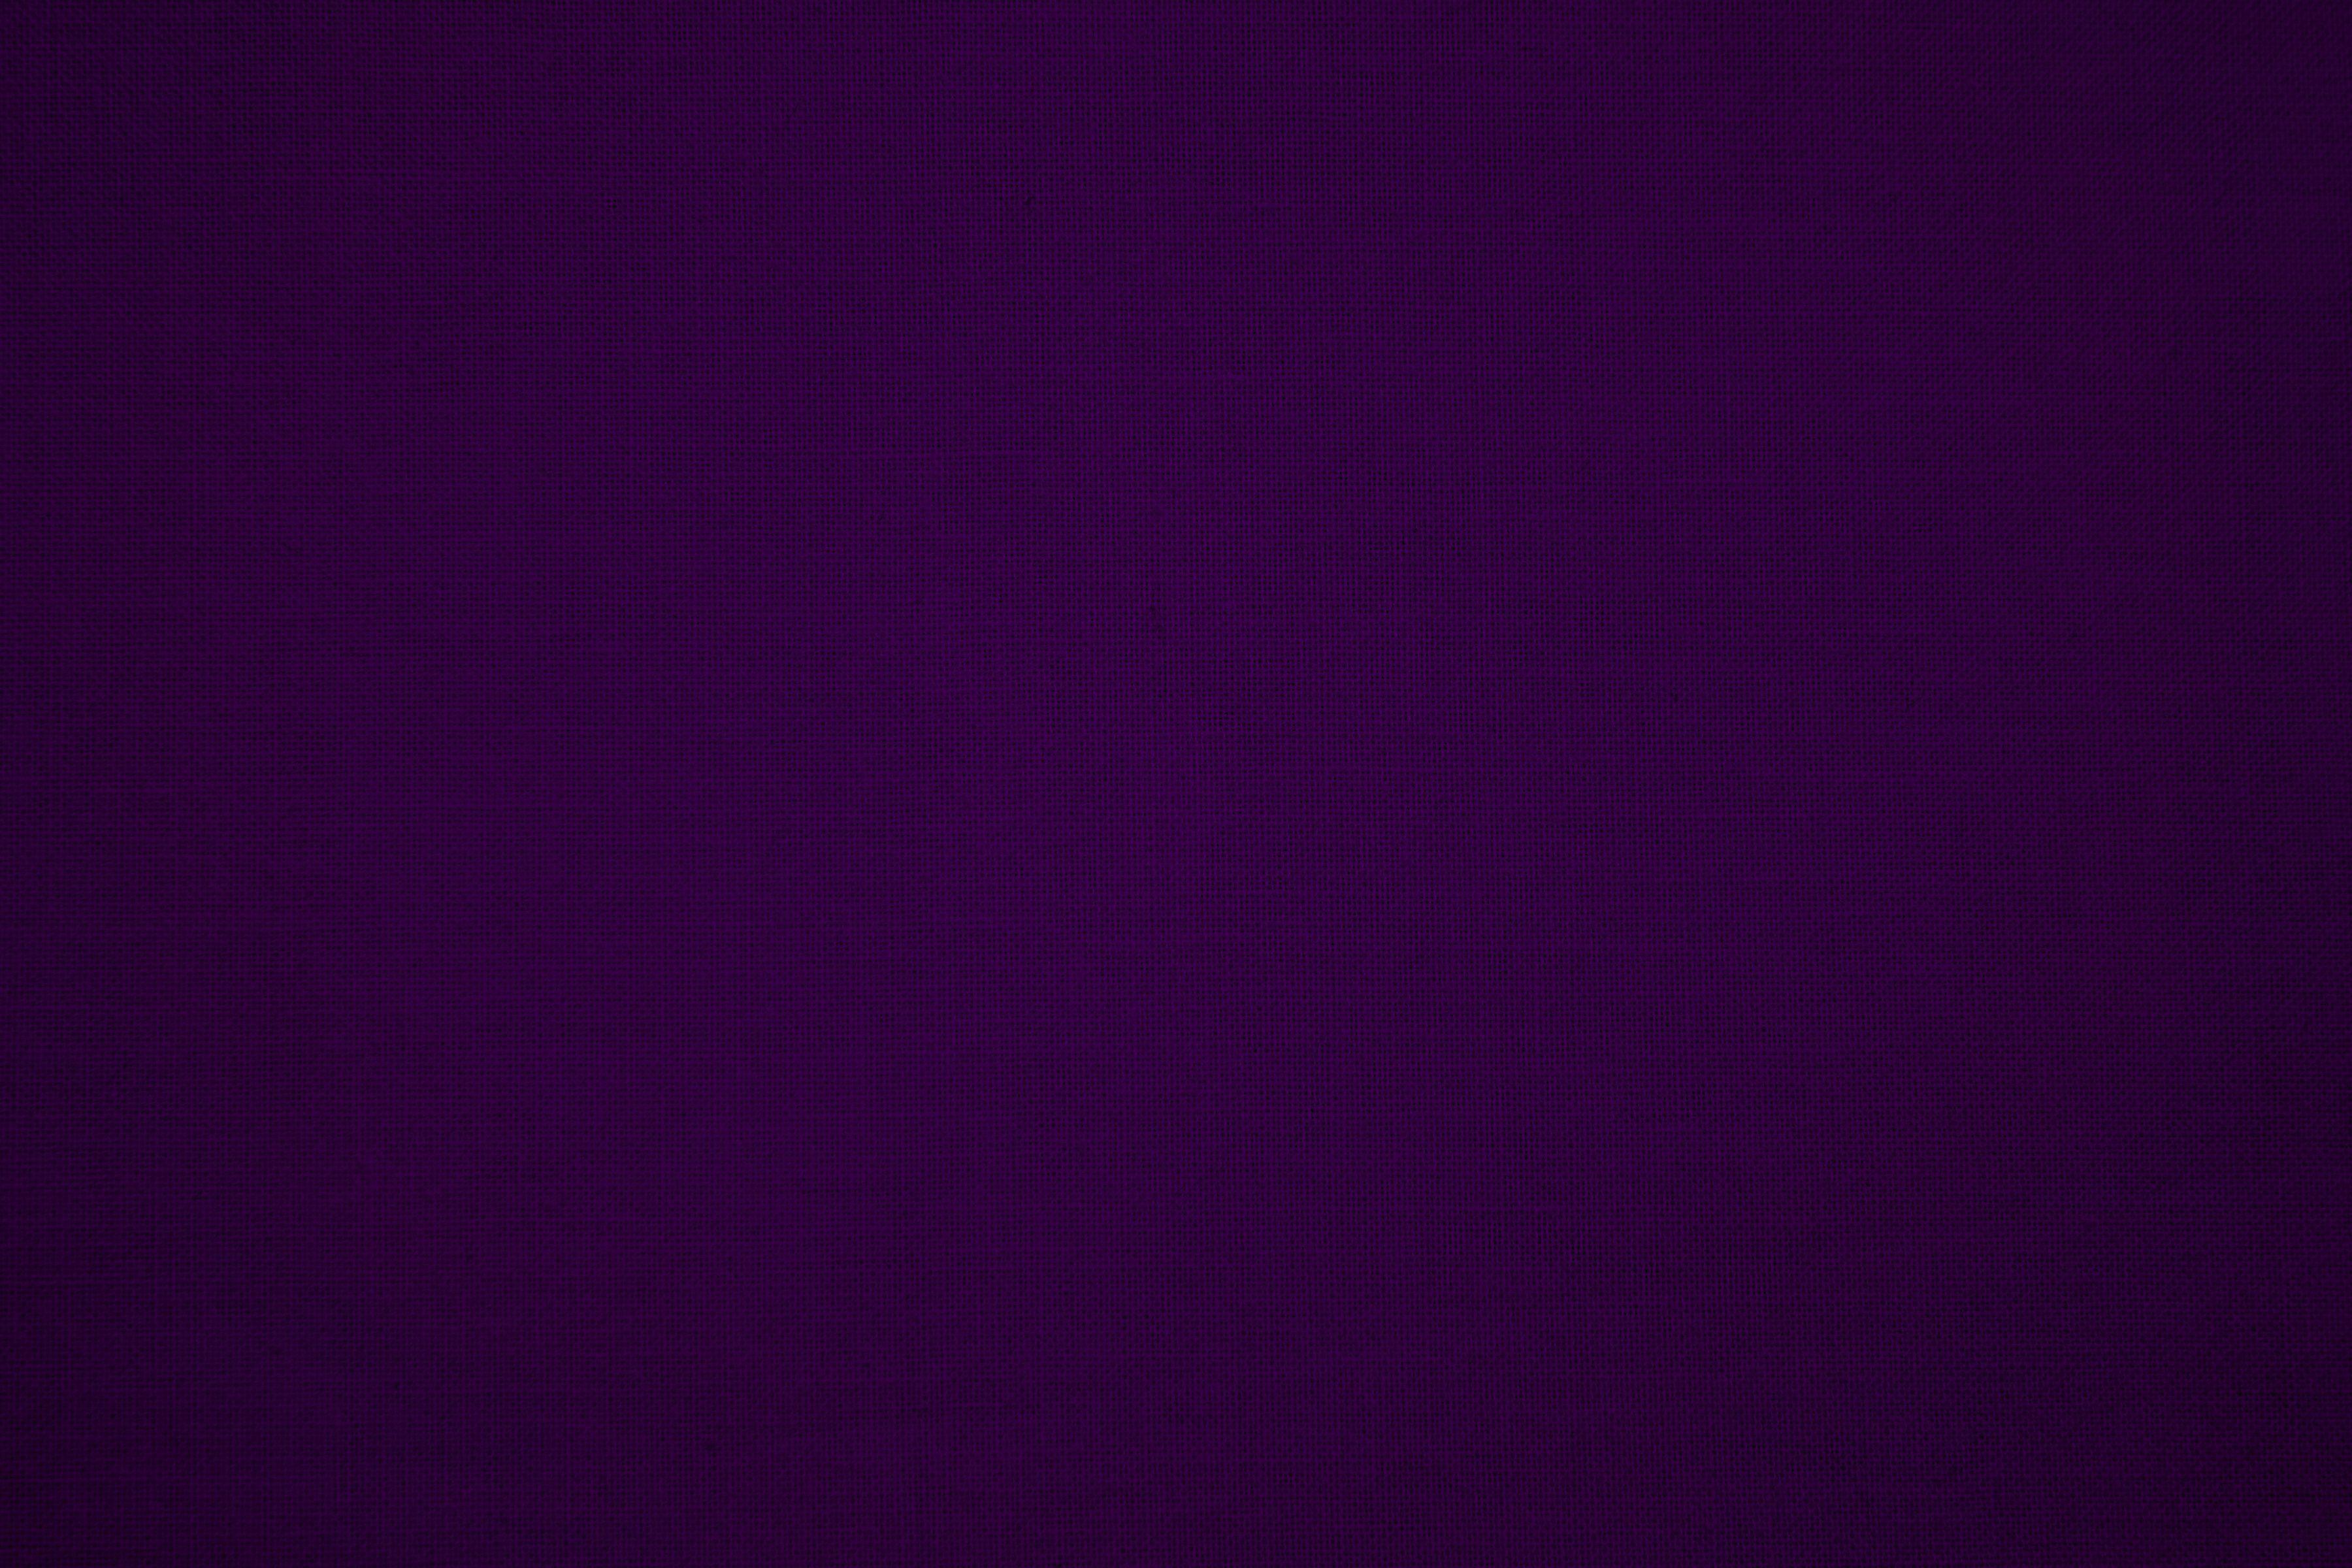 plain light purple background